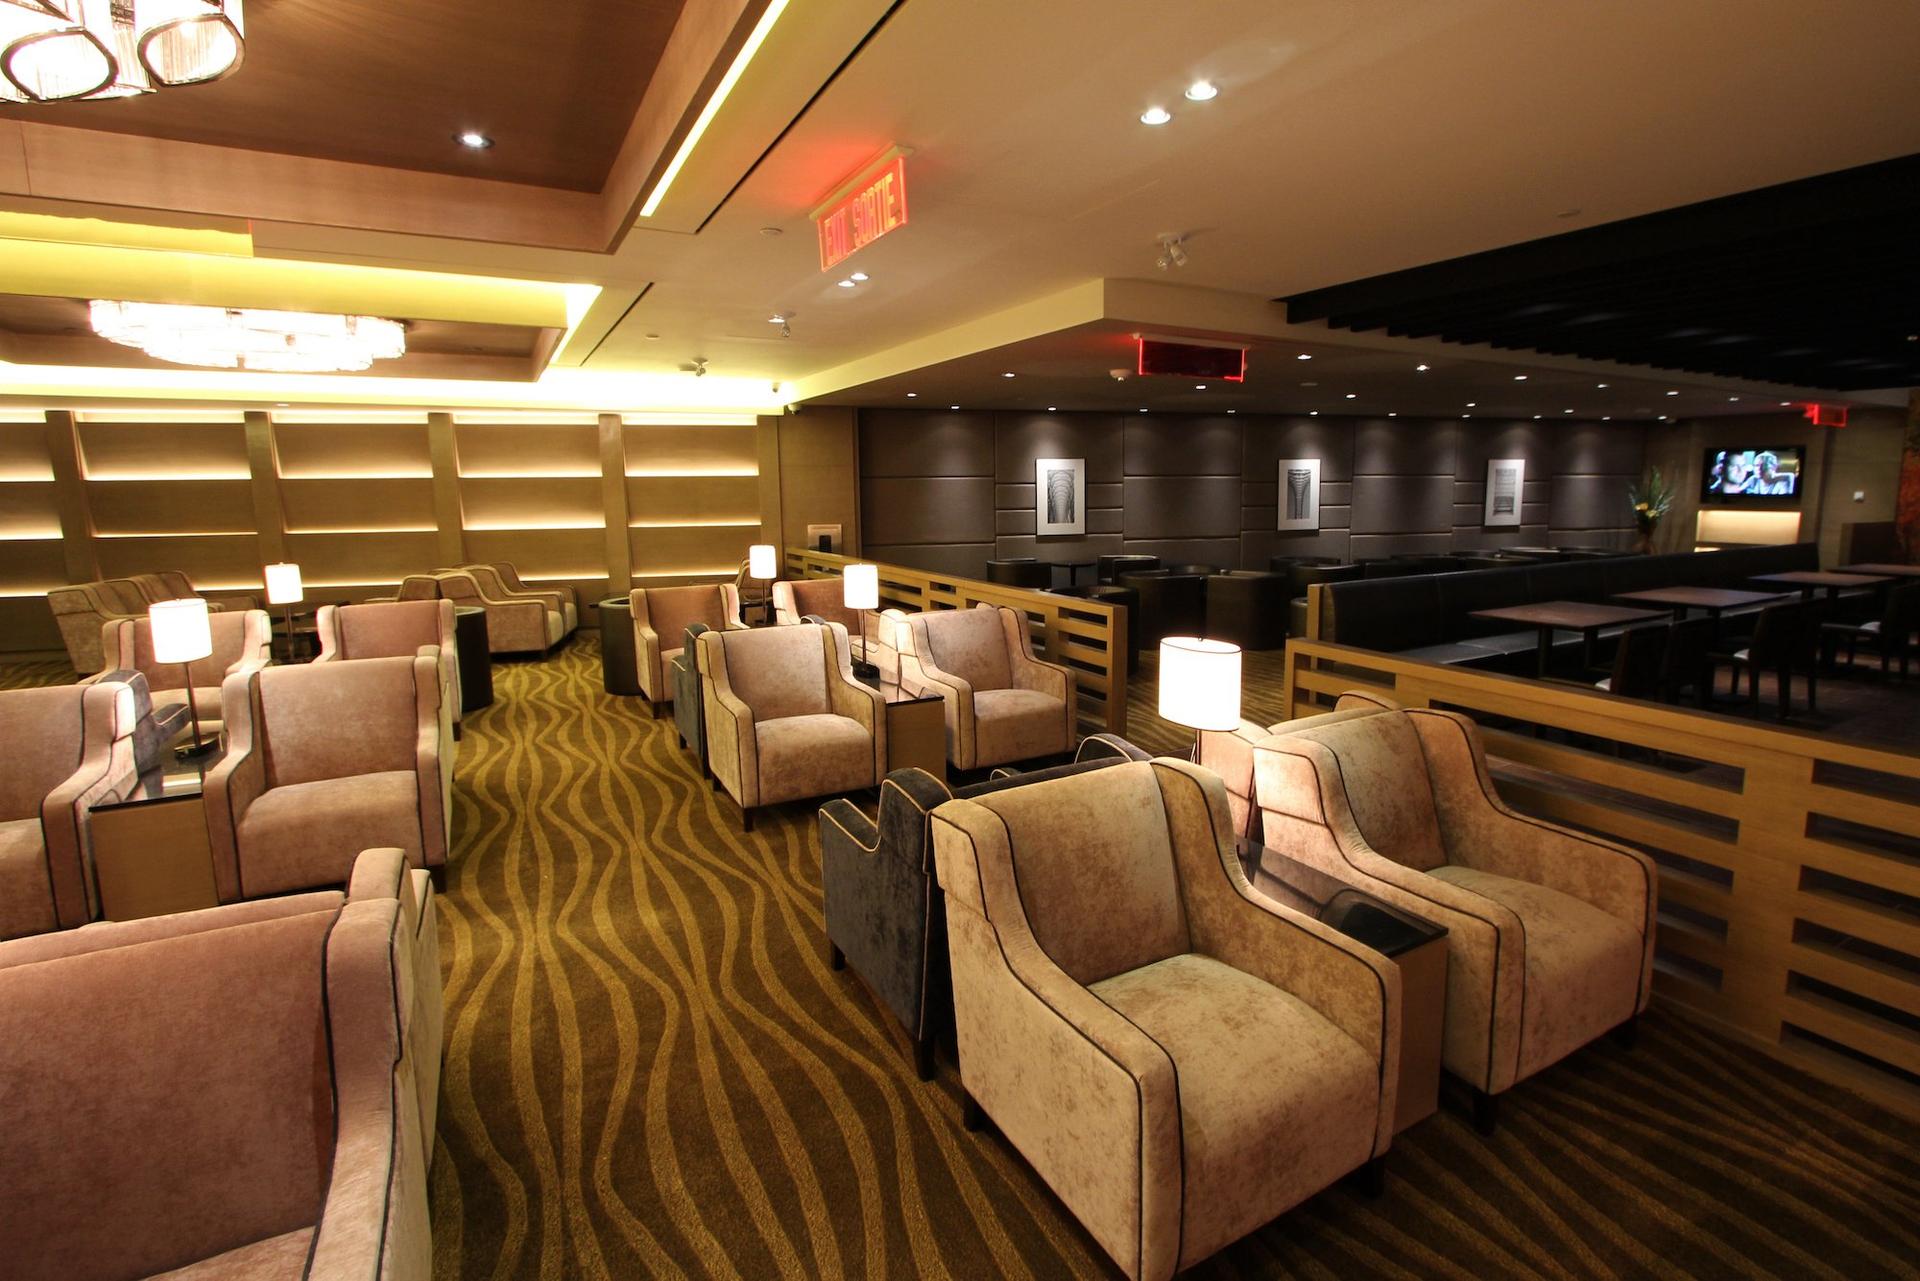 Plaza Premium Lounge image 3 of 48